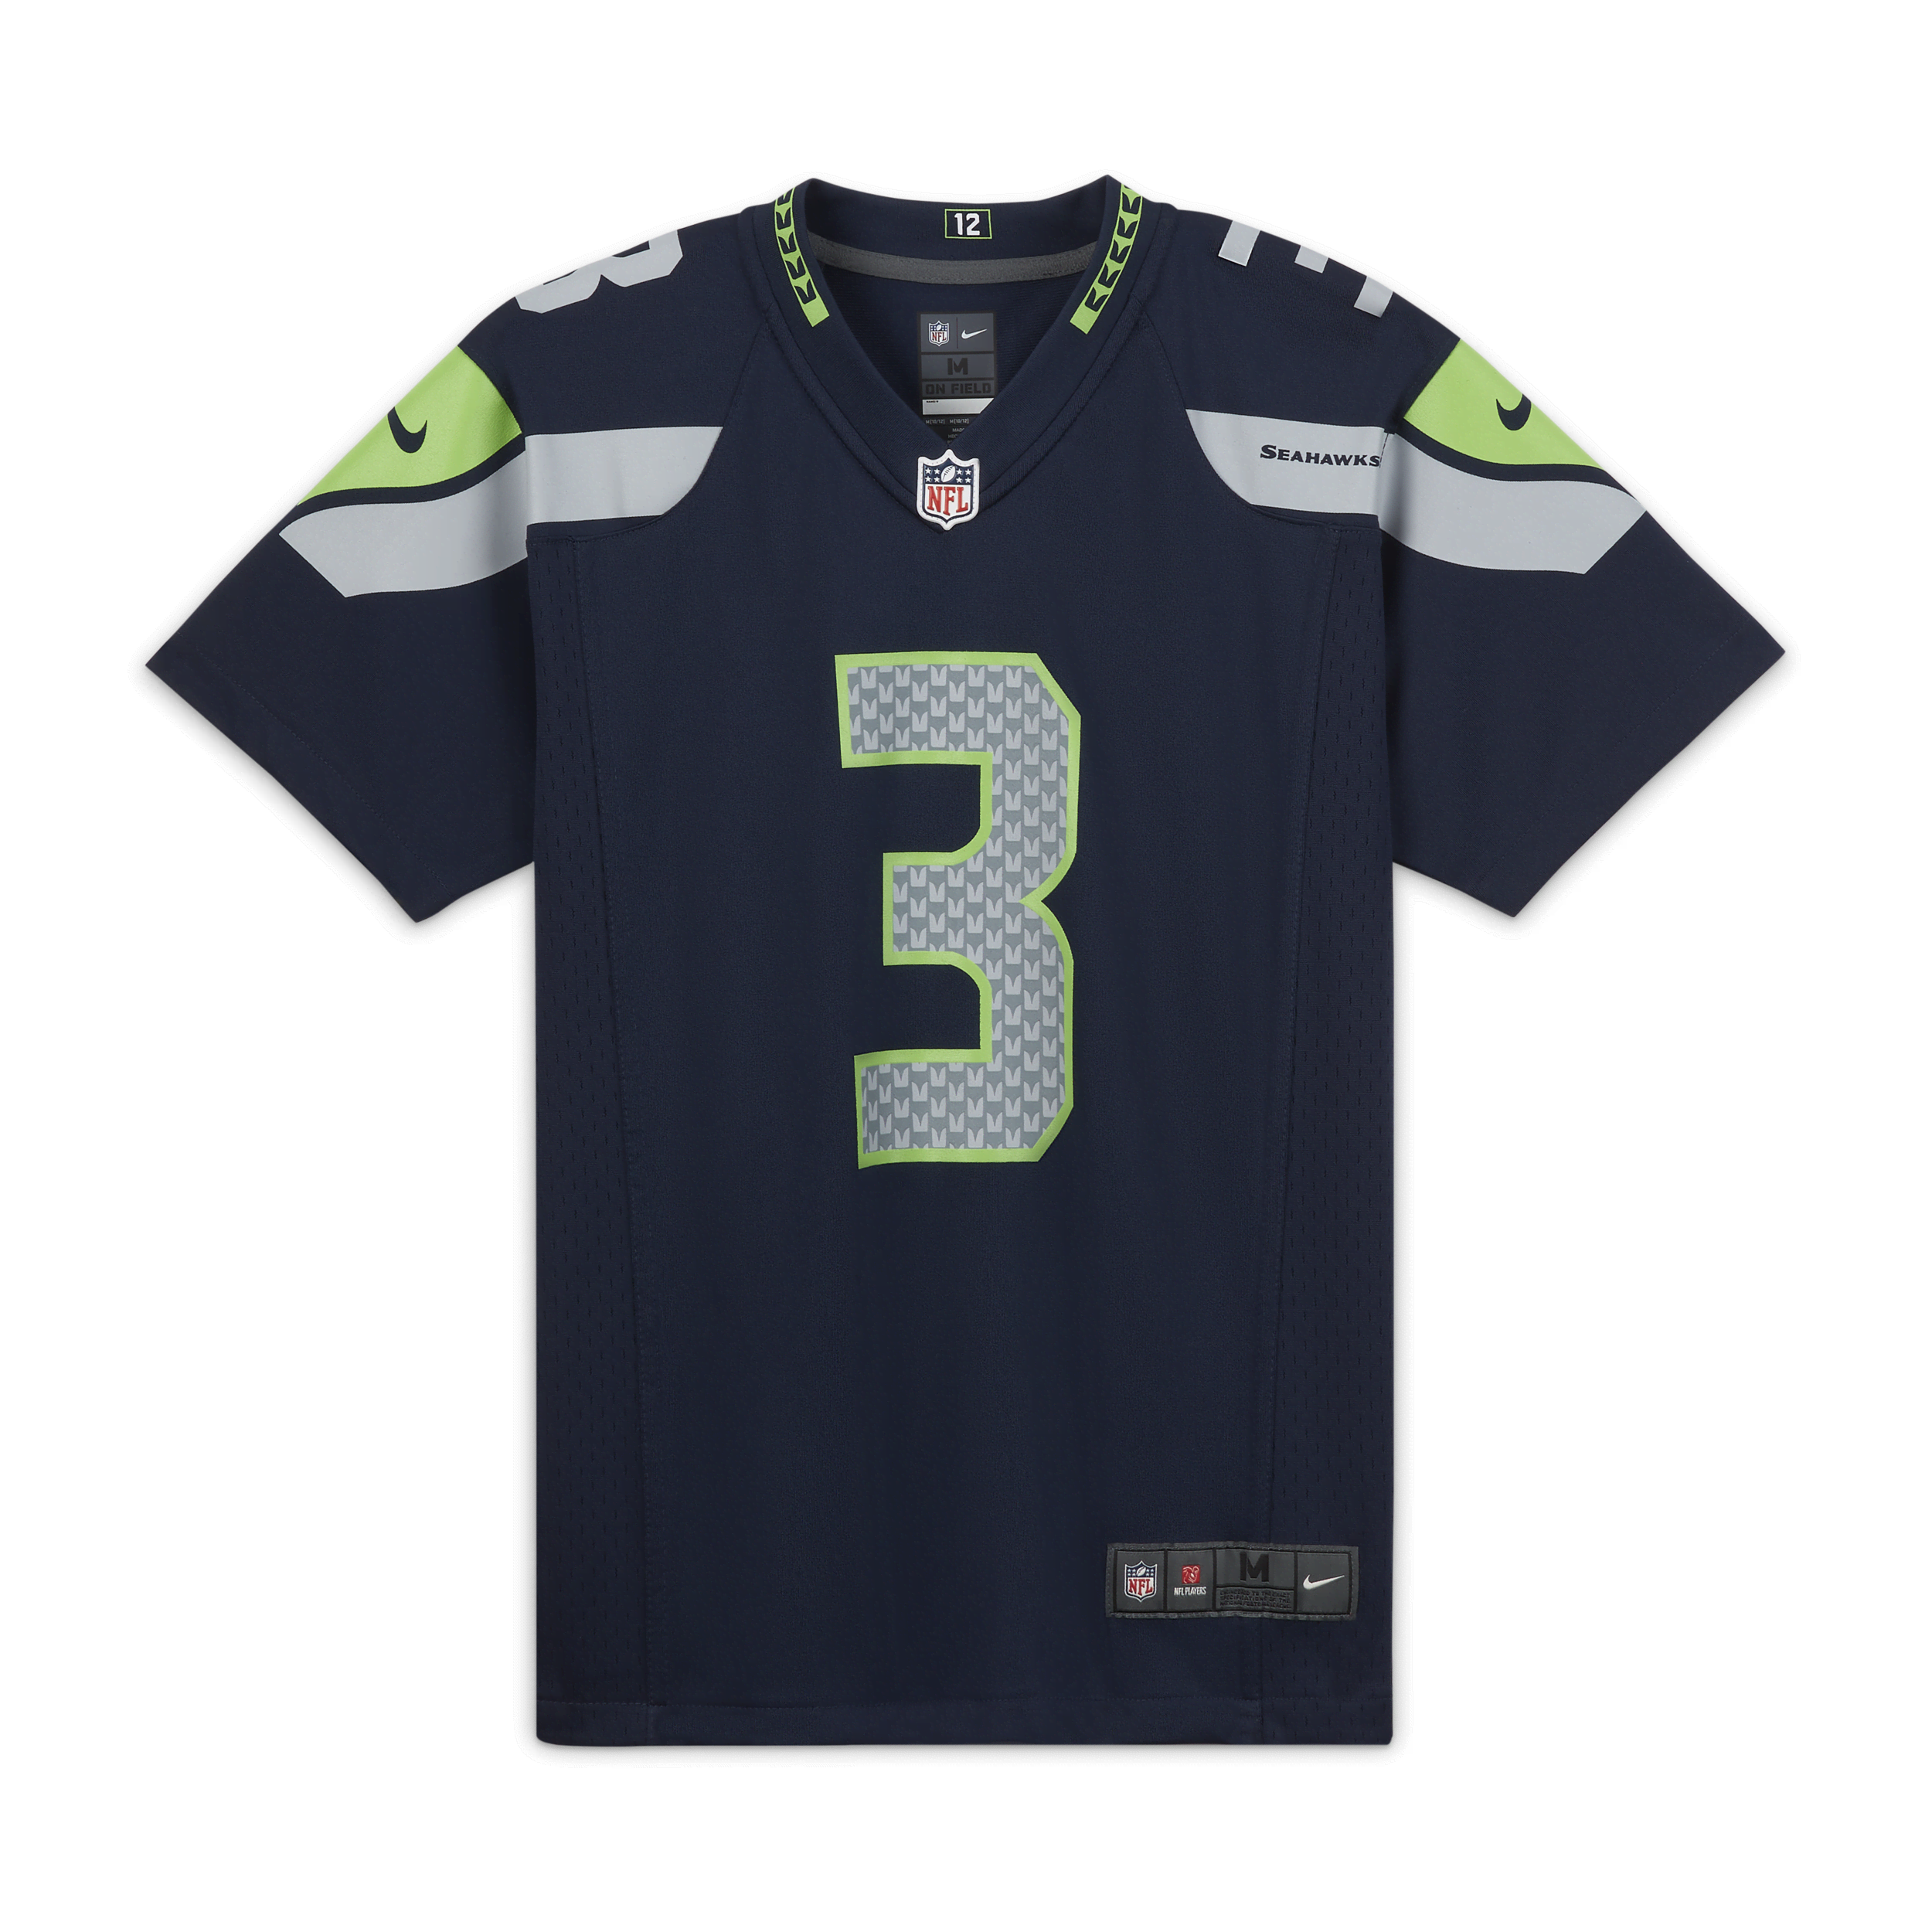 Nike NFL Seattle Seahawks (Russell Wilson) Camiseta de fútbol americano del partido - Niño/a - Azul